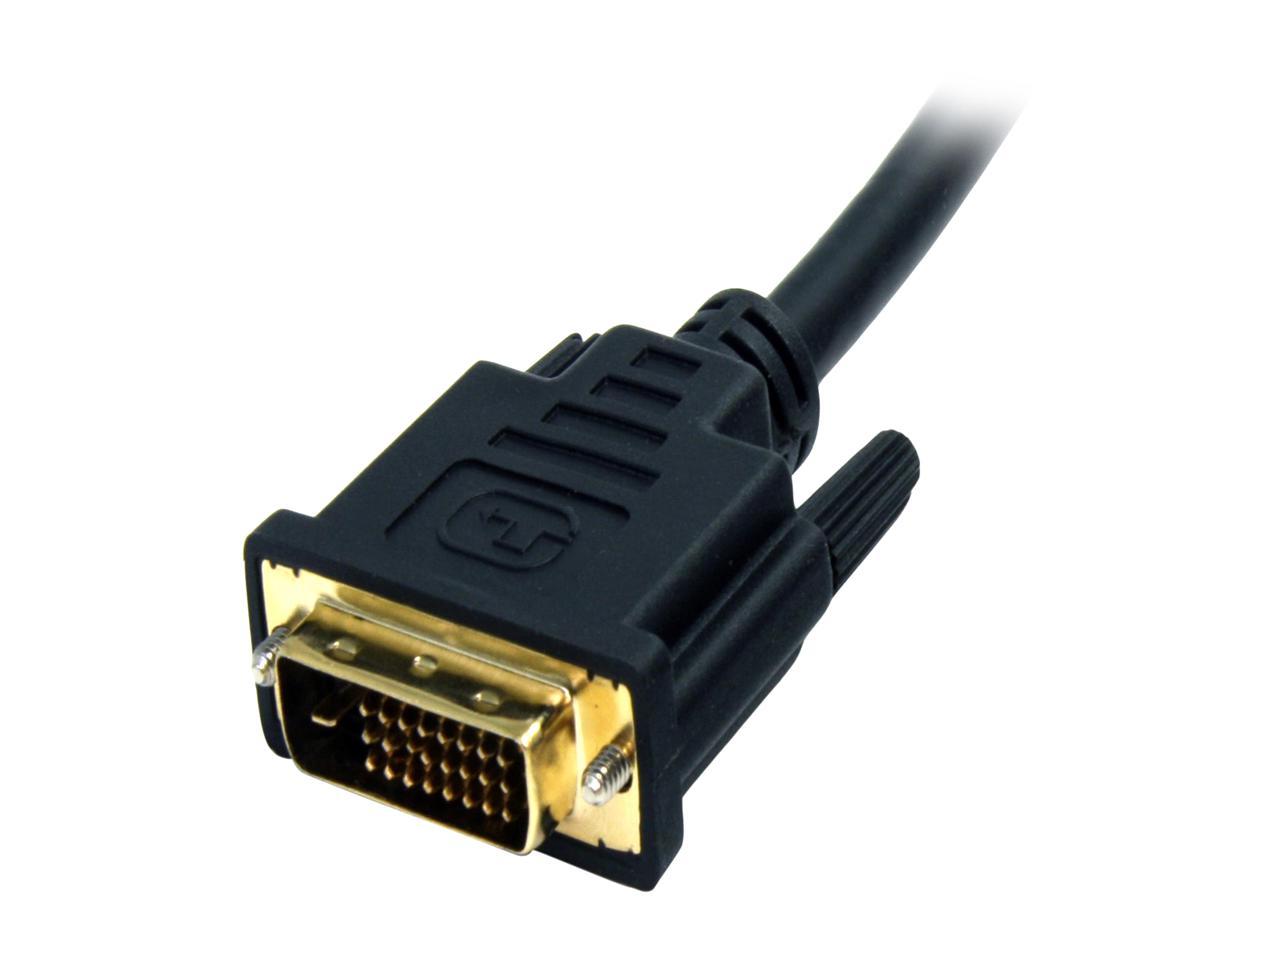 StarTech.com DP2DVI2MM6 DisplayPort To DVI Cable - 6 ft. / 2m - Passive - 1080p - DP to DVI Cable - DisplayPort Adapter Cable